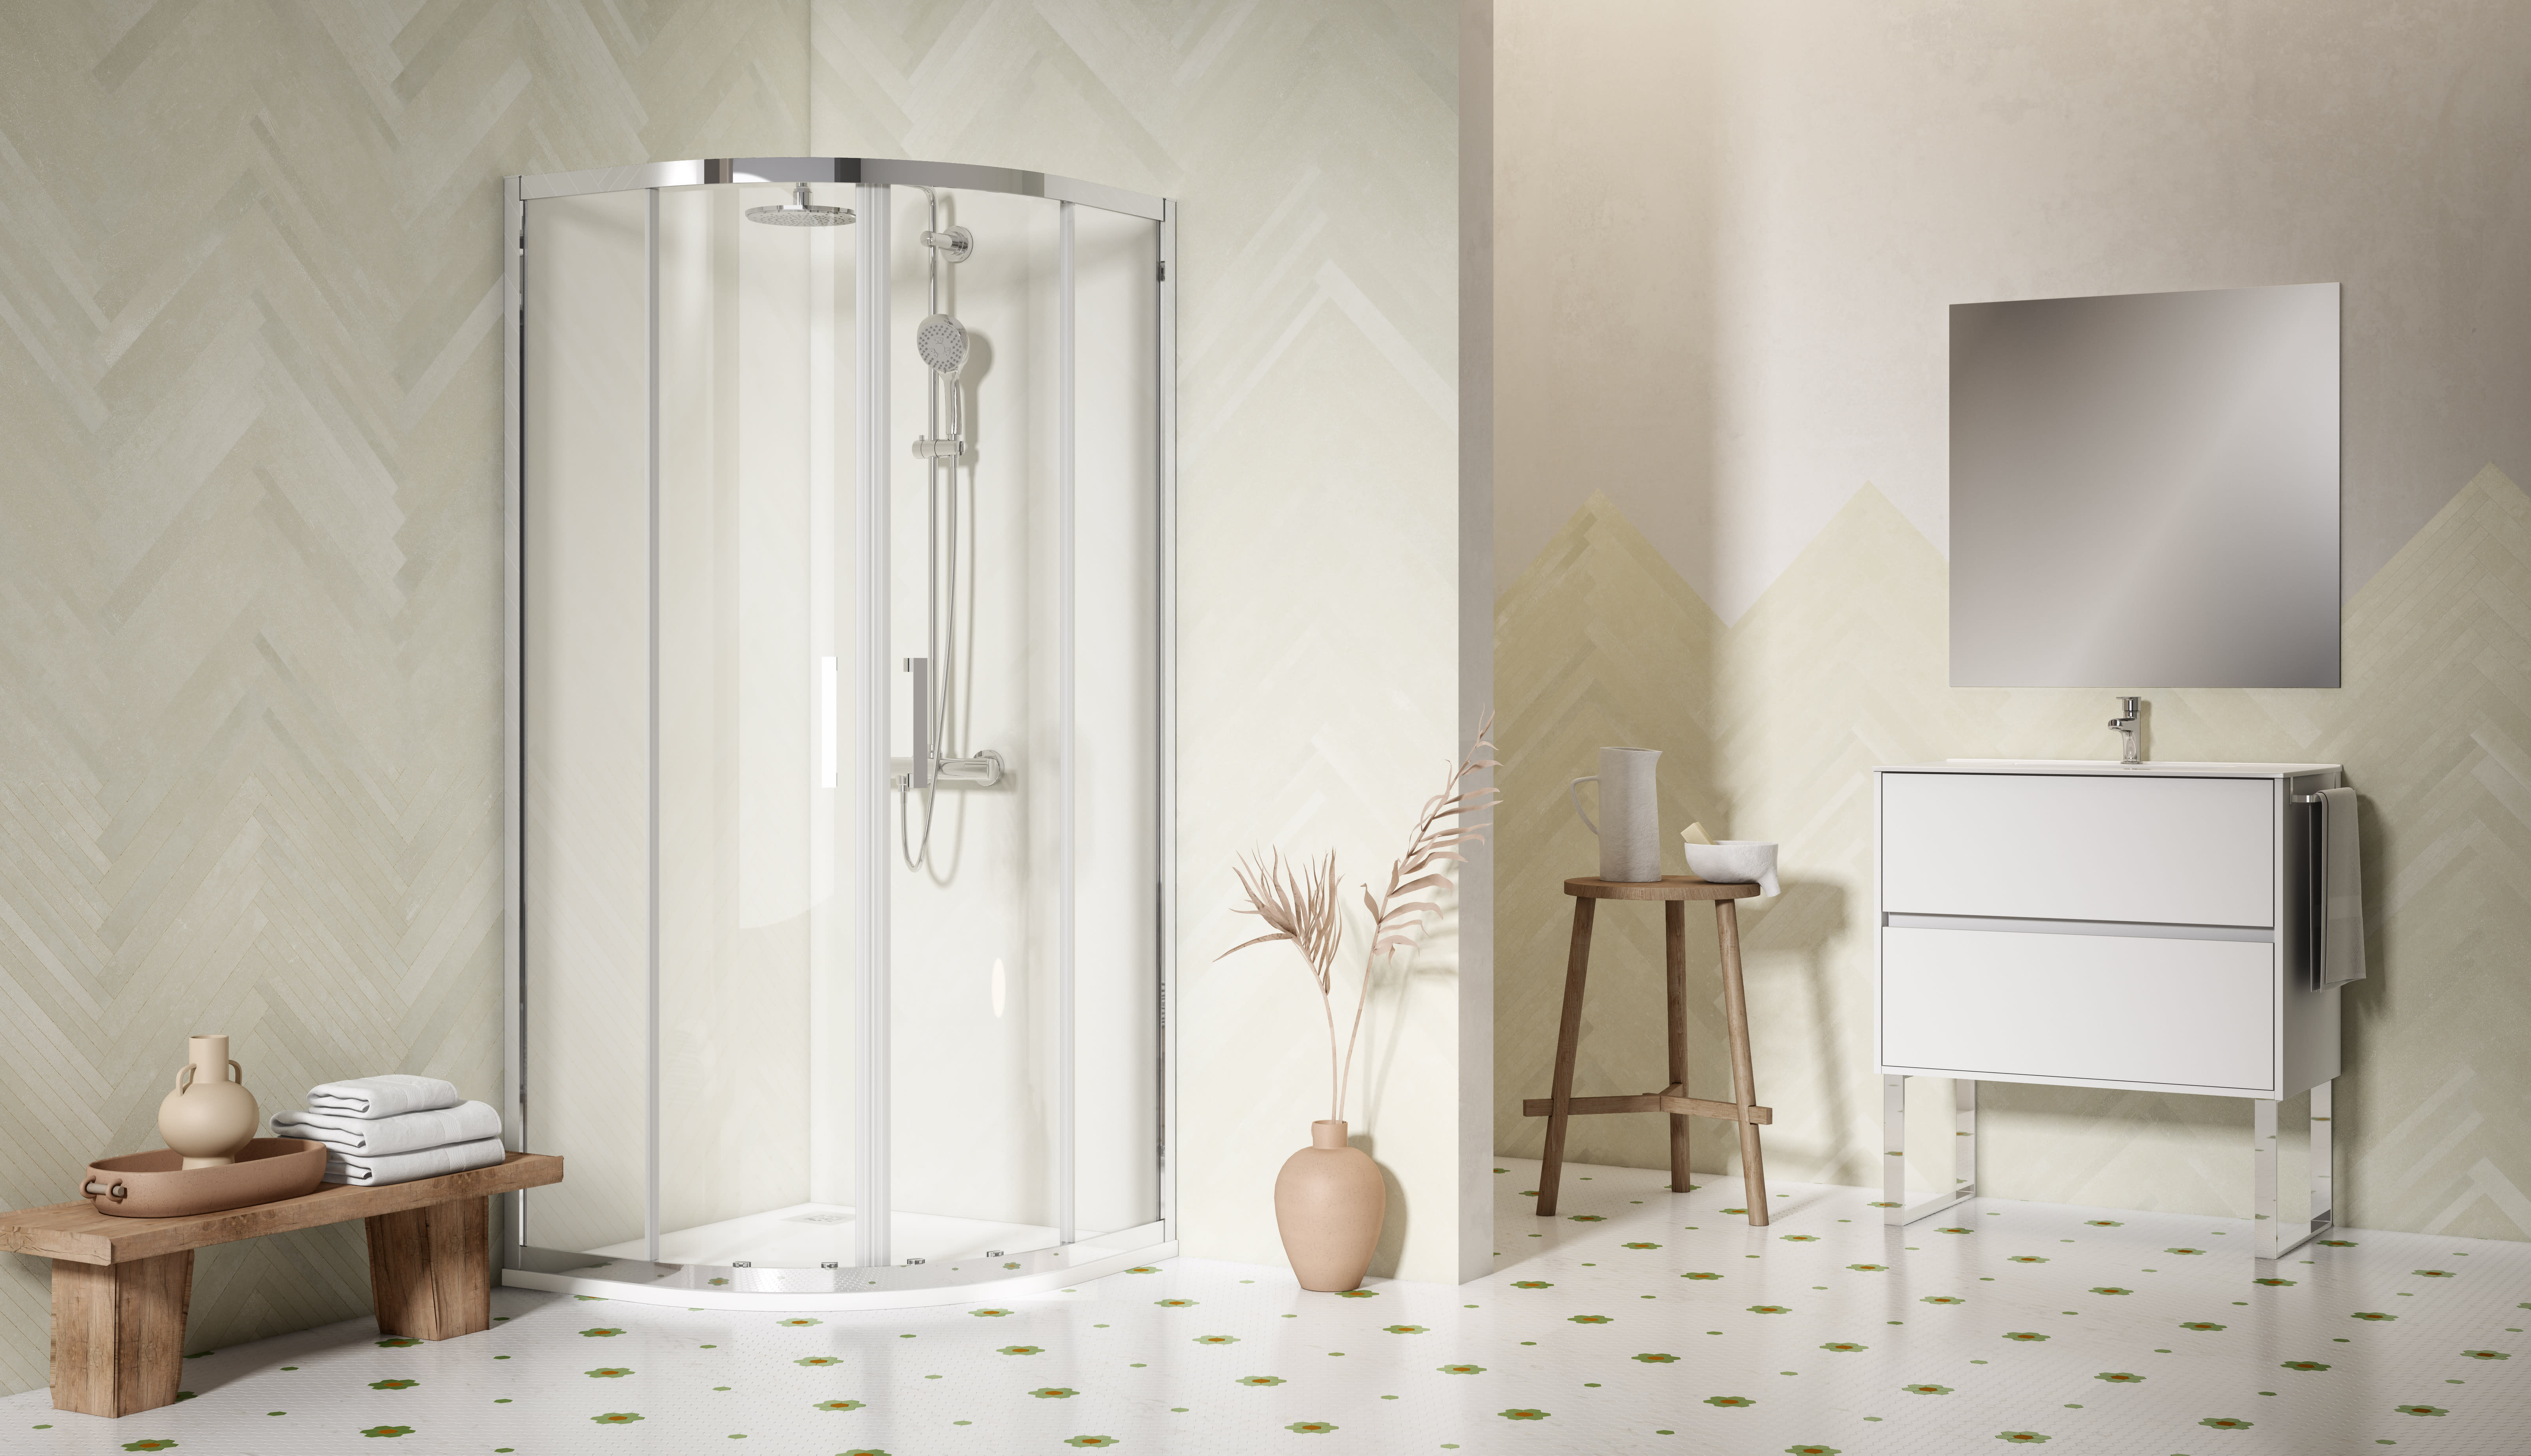 Semicircular ducha Antical modelo 300 - Mamparas de bañera y ducha